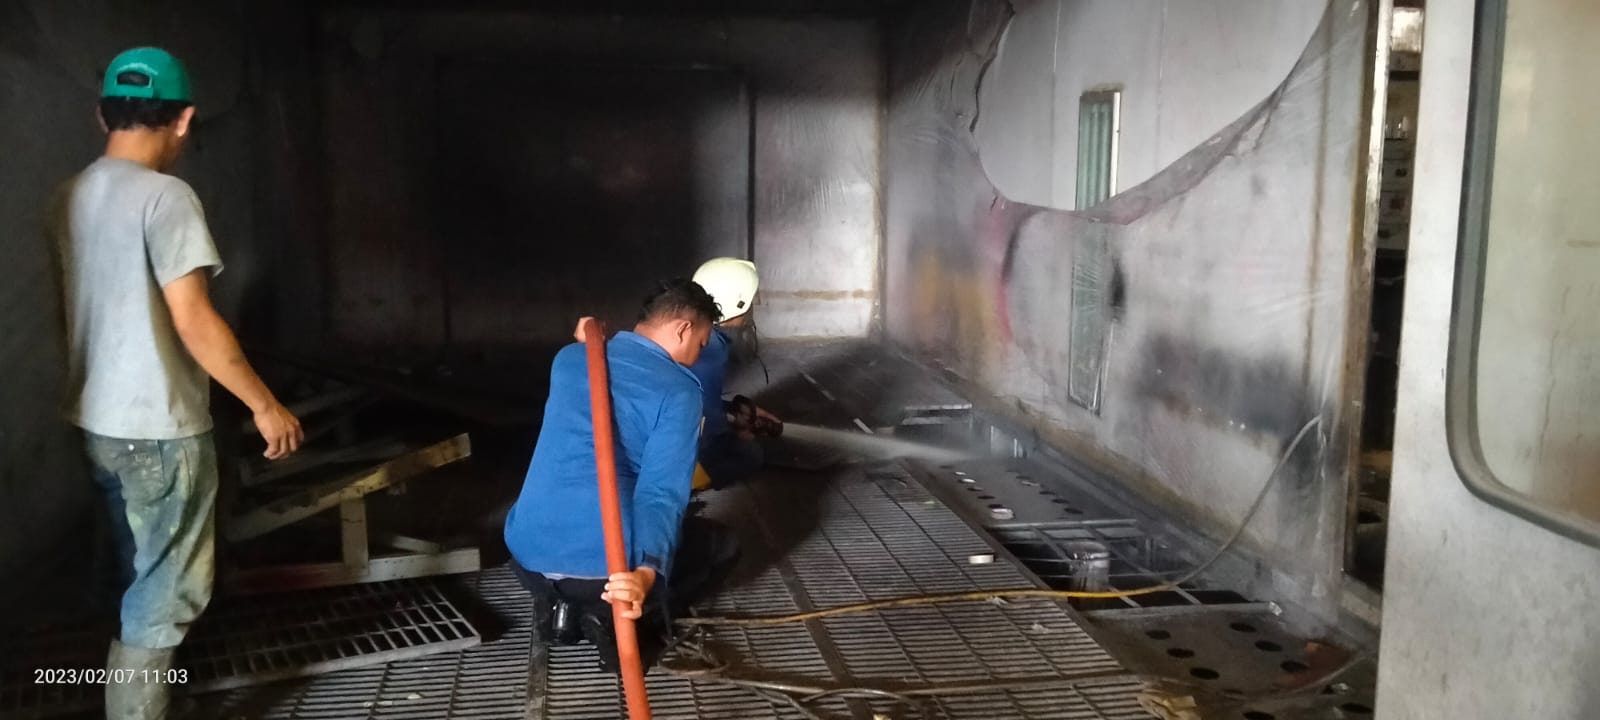 Korsleting Listrik Mesin Cat Oven, Bengkel di Palembang Nyaris Terbakar